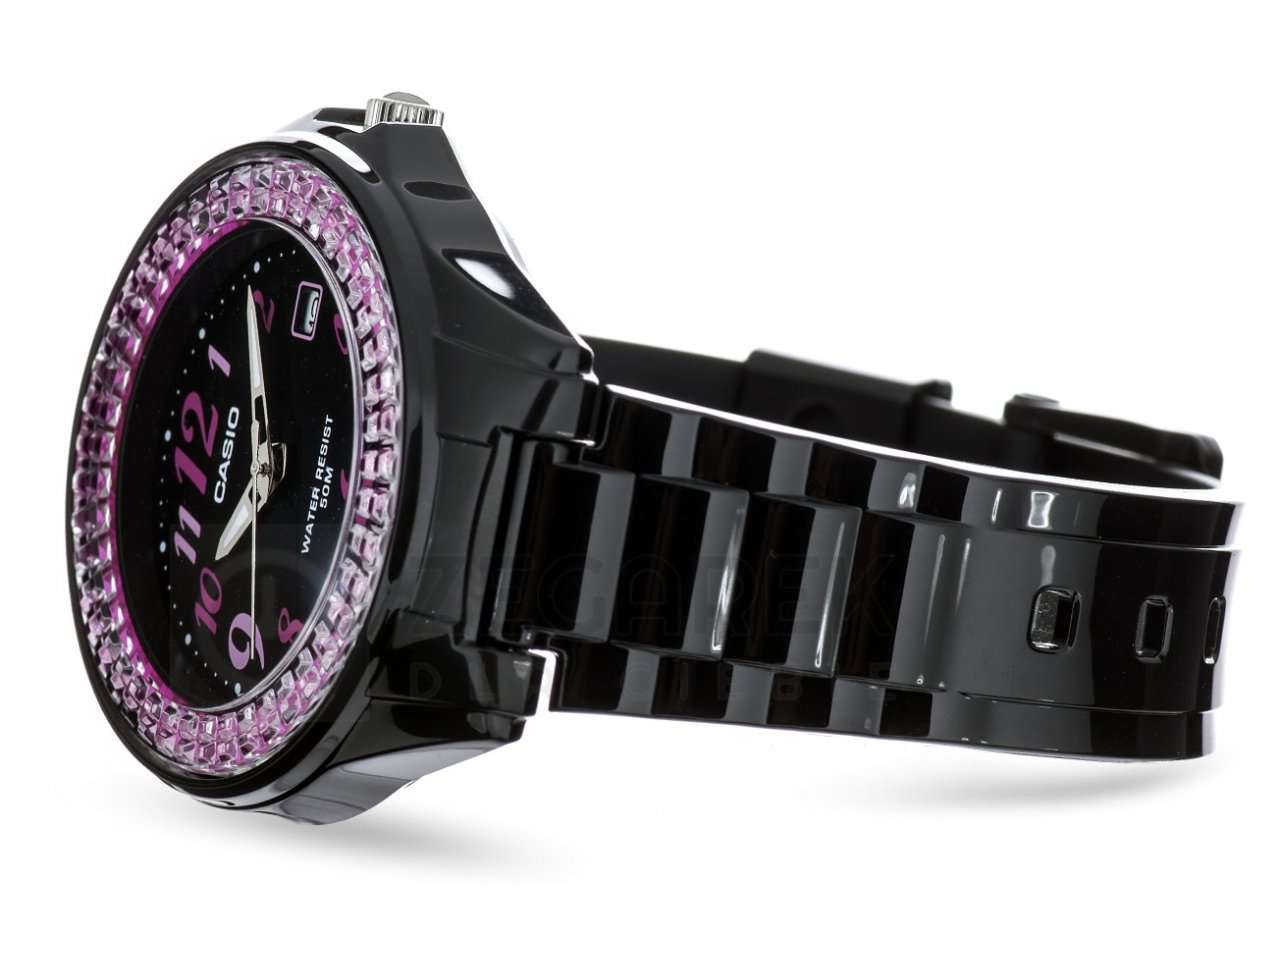 Casio LX-500H-1B Black Resin Watch For Women-Watch Portal Philippines